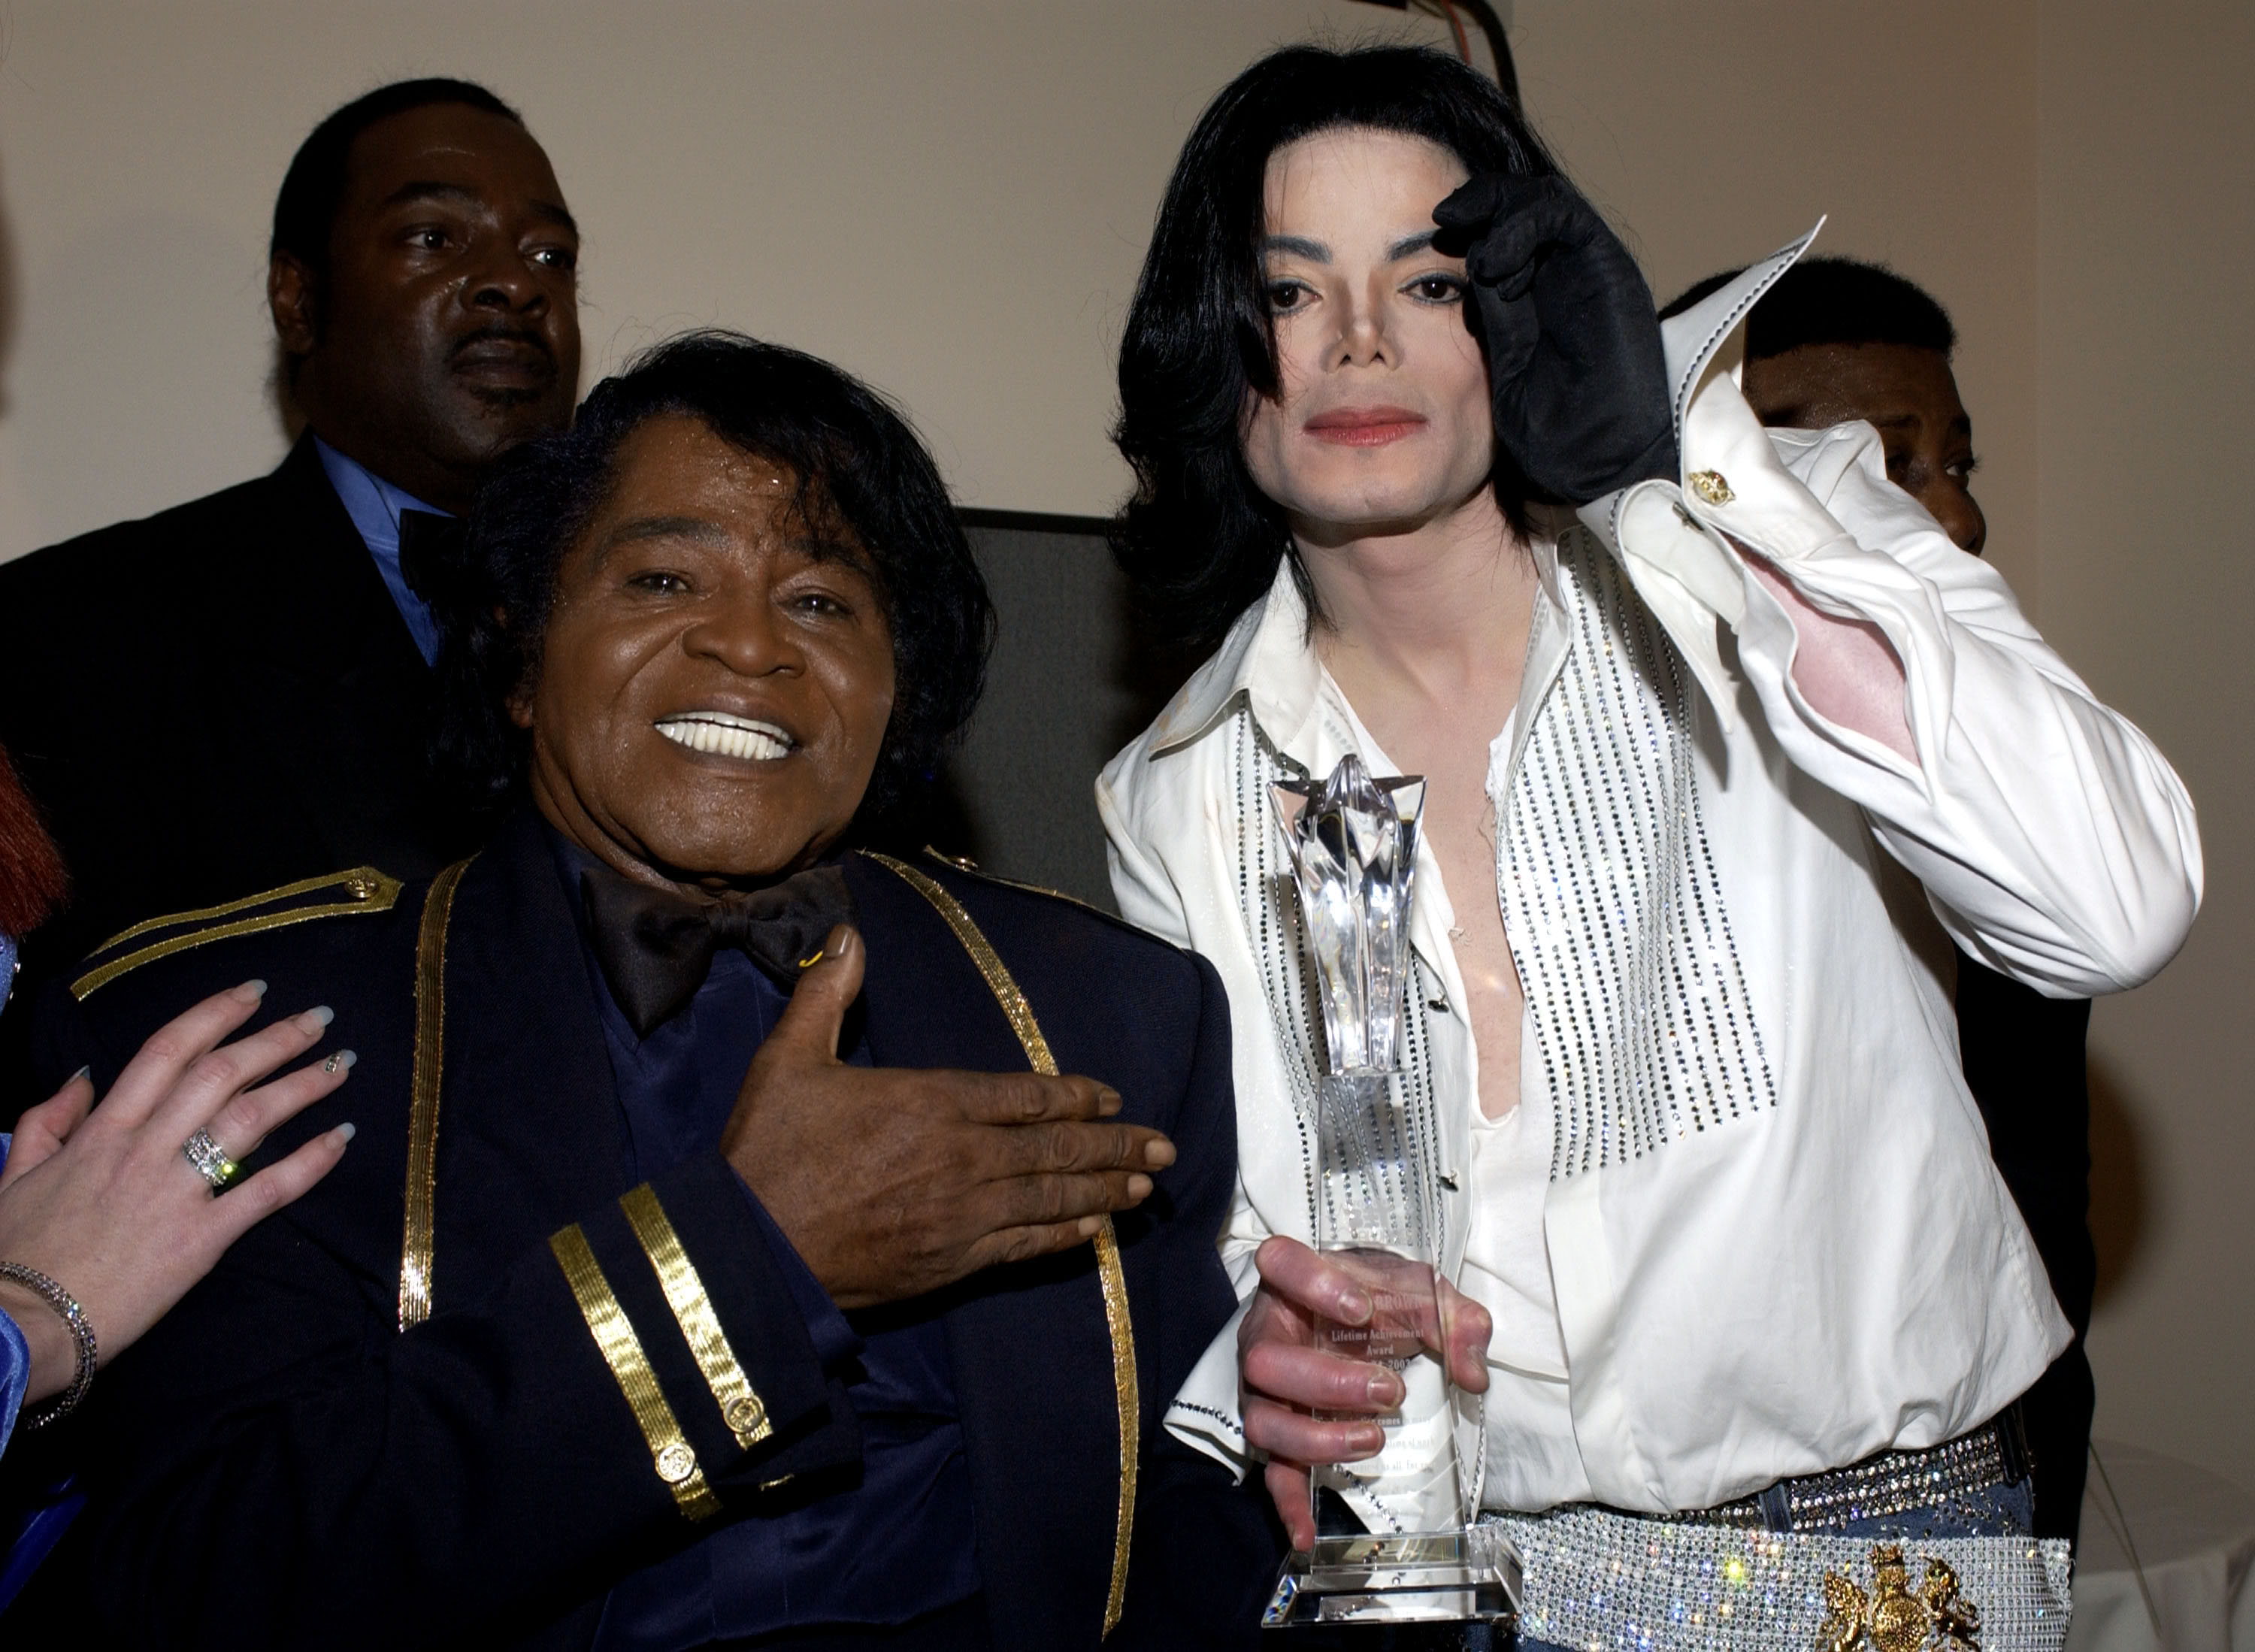 Michael and James Brown BET awards 2003 - Michael Jackson Photo (36594758) - Fanpop3000 x 2198